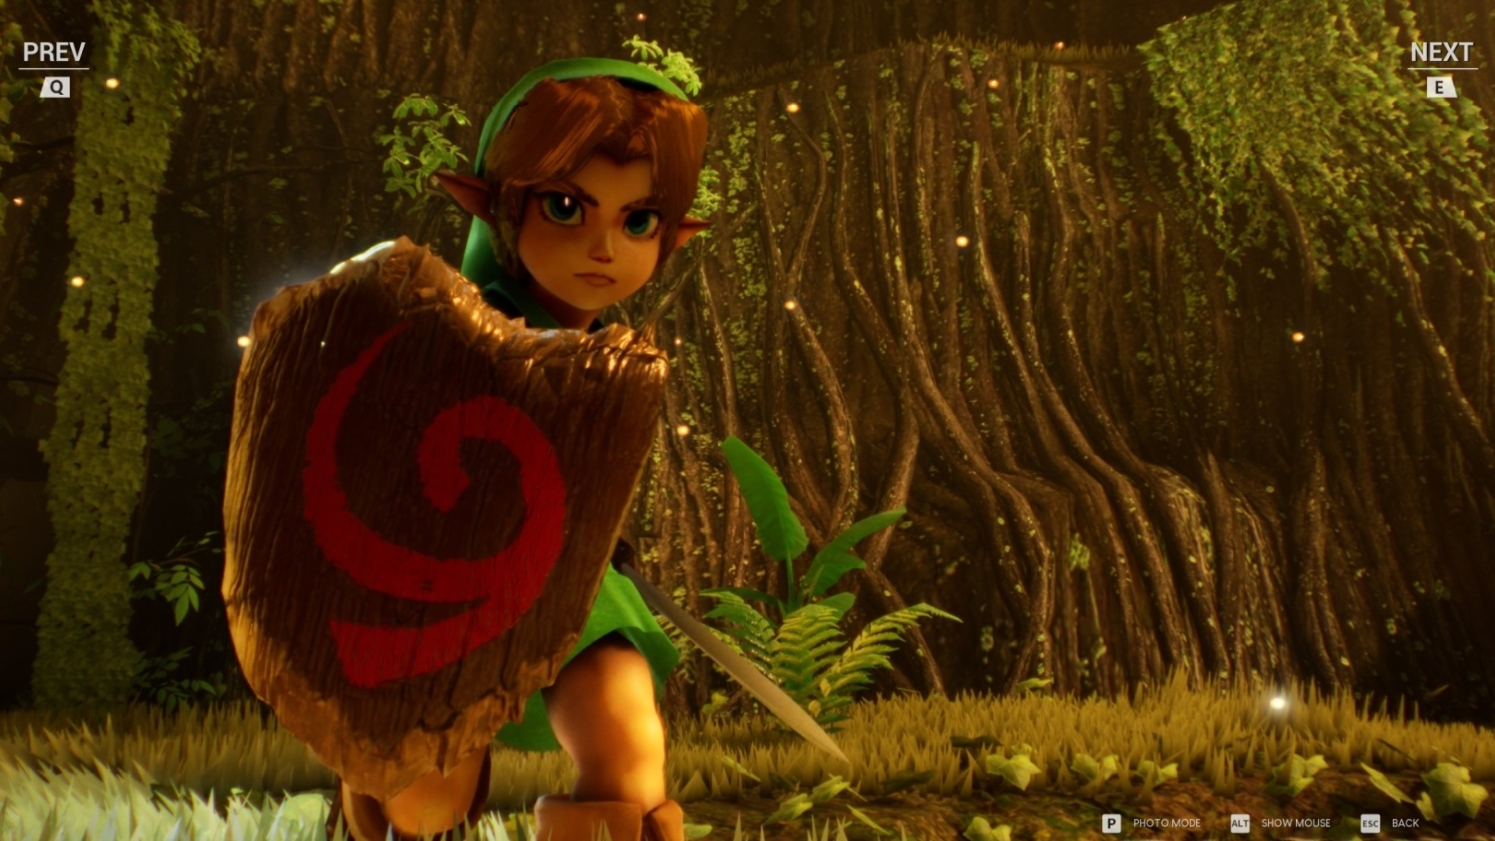 Legend of Zelda: Ocarina of Time gets Switch upgrade - Game News 24